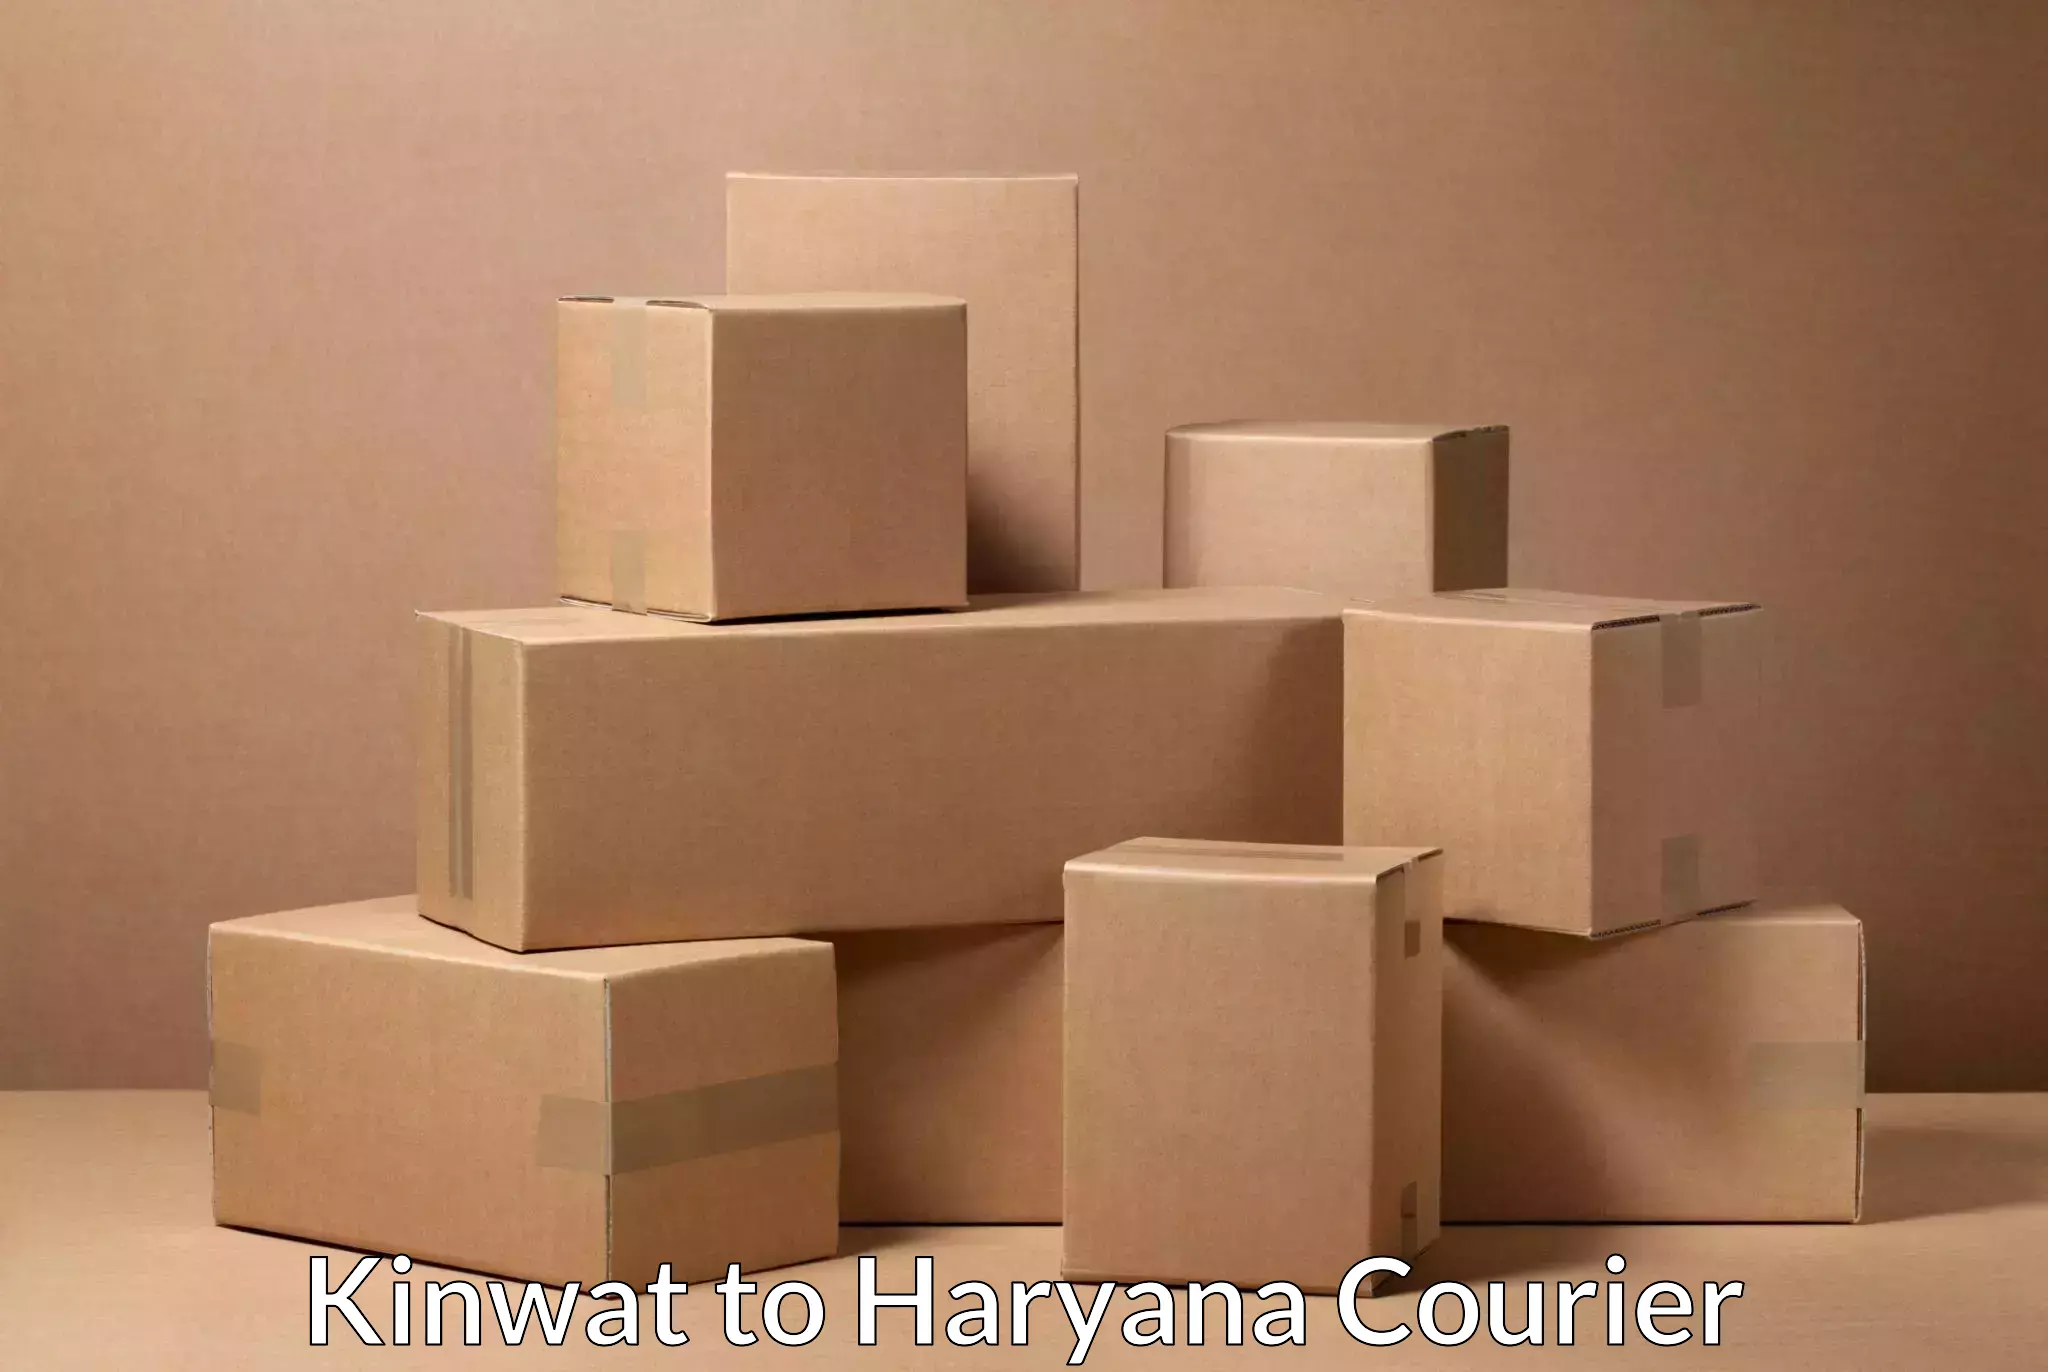 Enhanced shipping experience in Kinwat to NCR Haryana